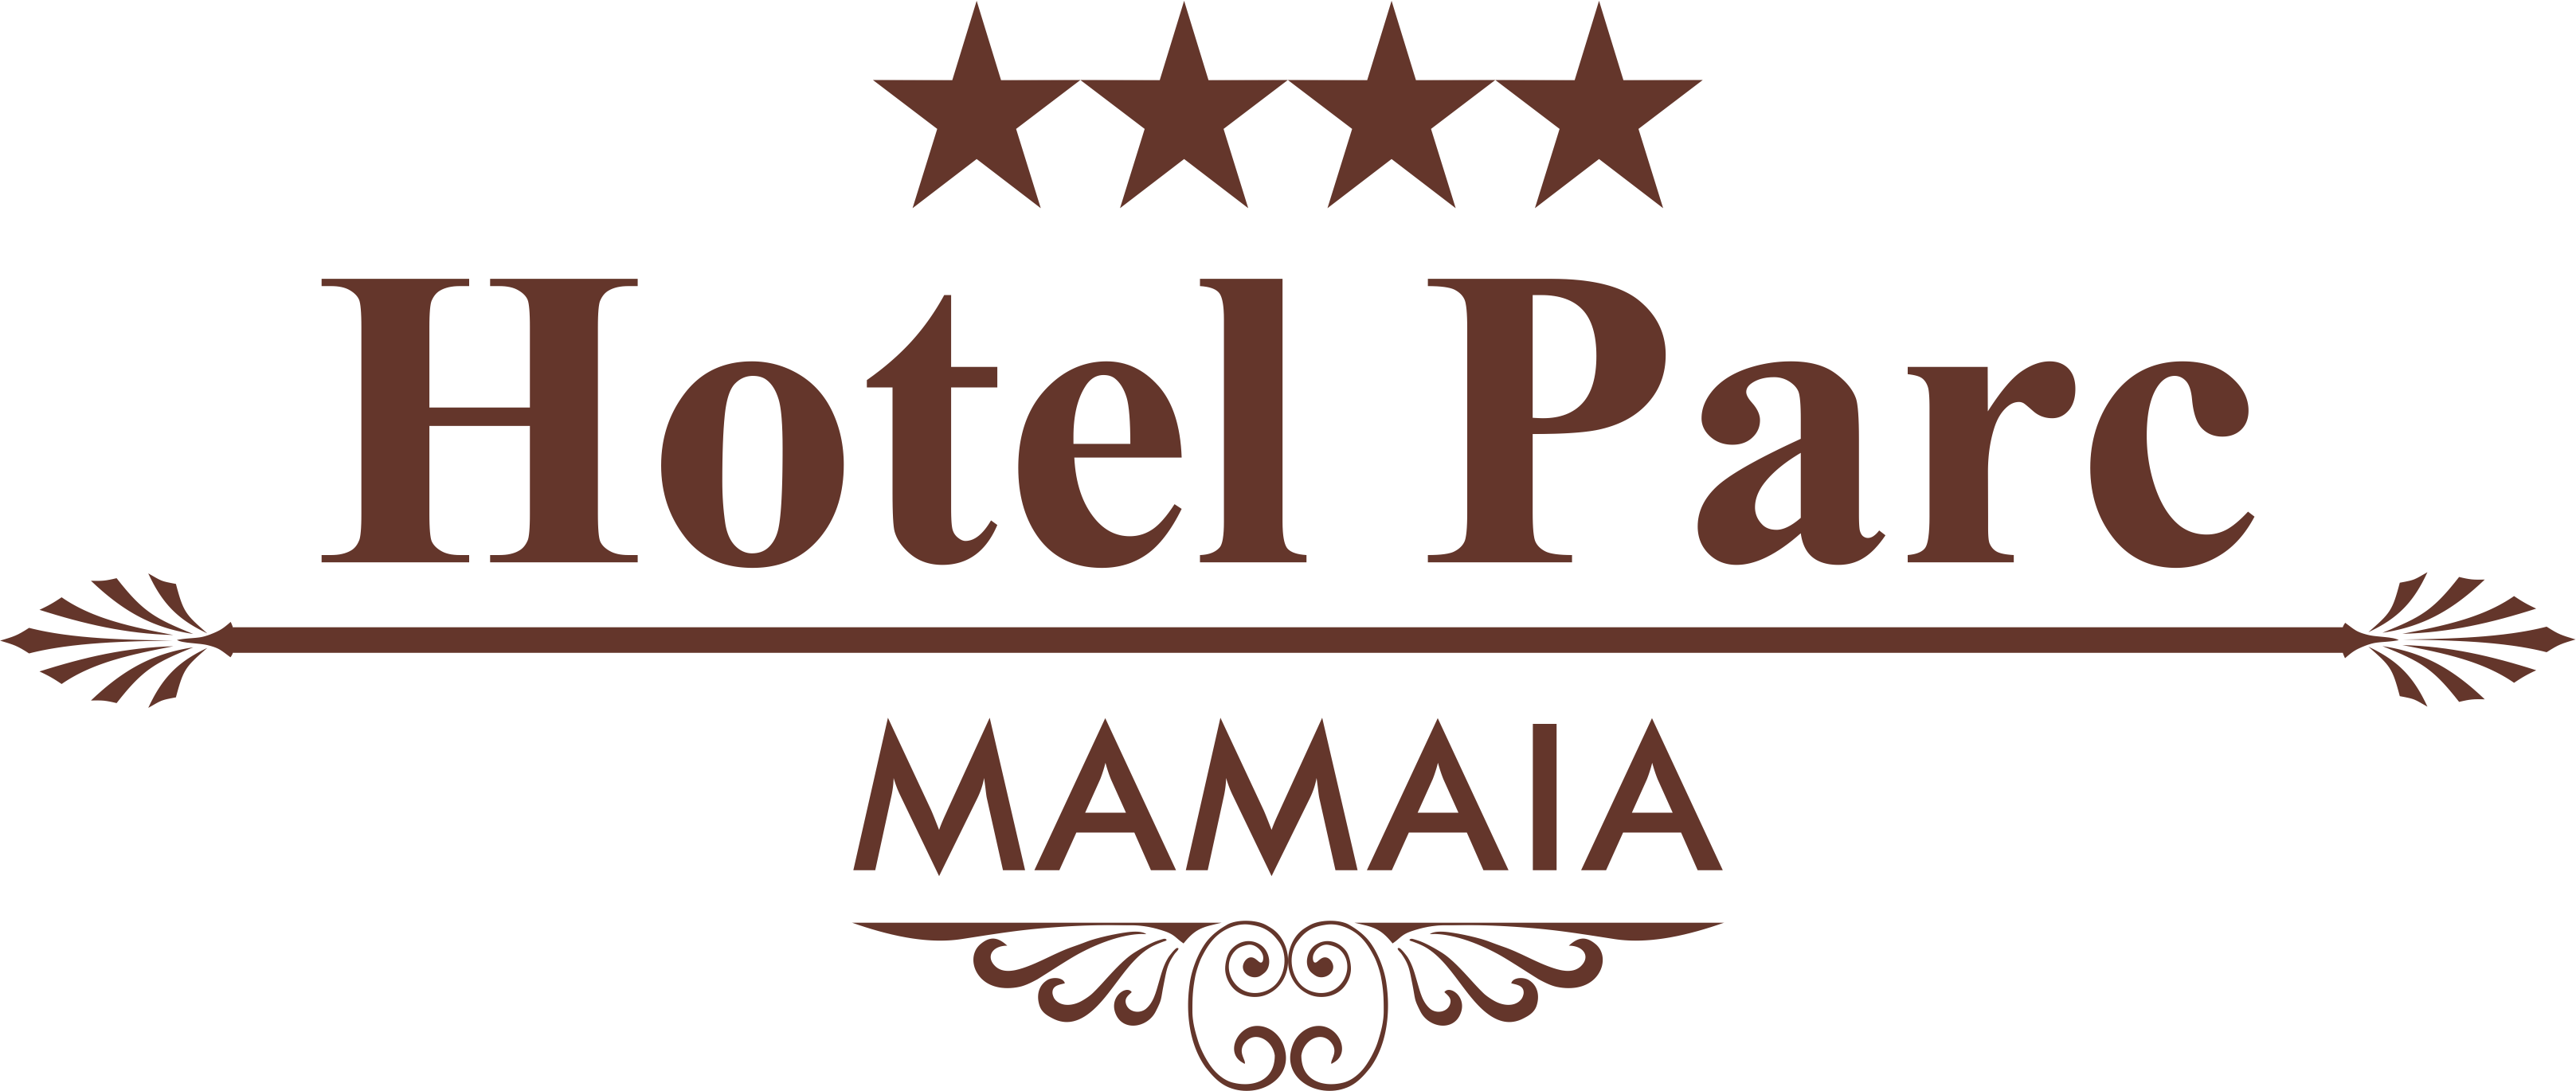 hotel parc mamaia